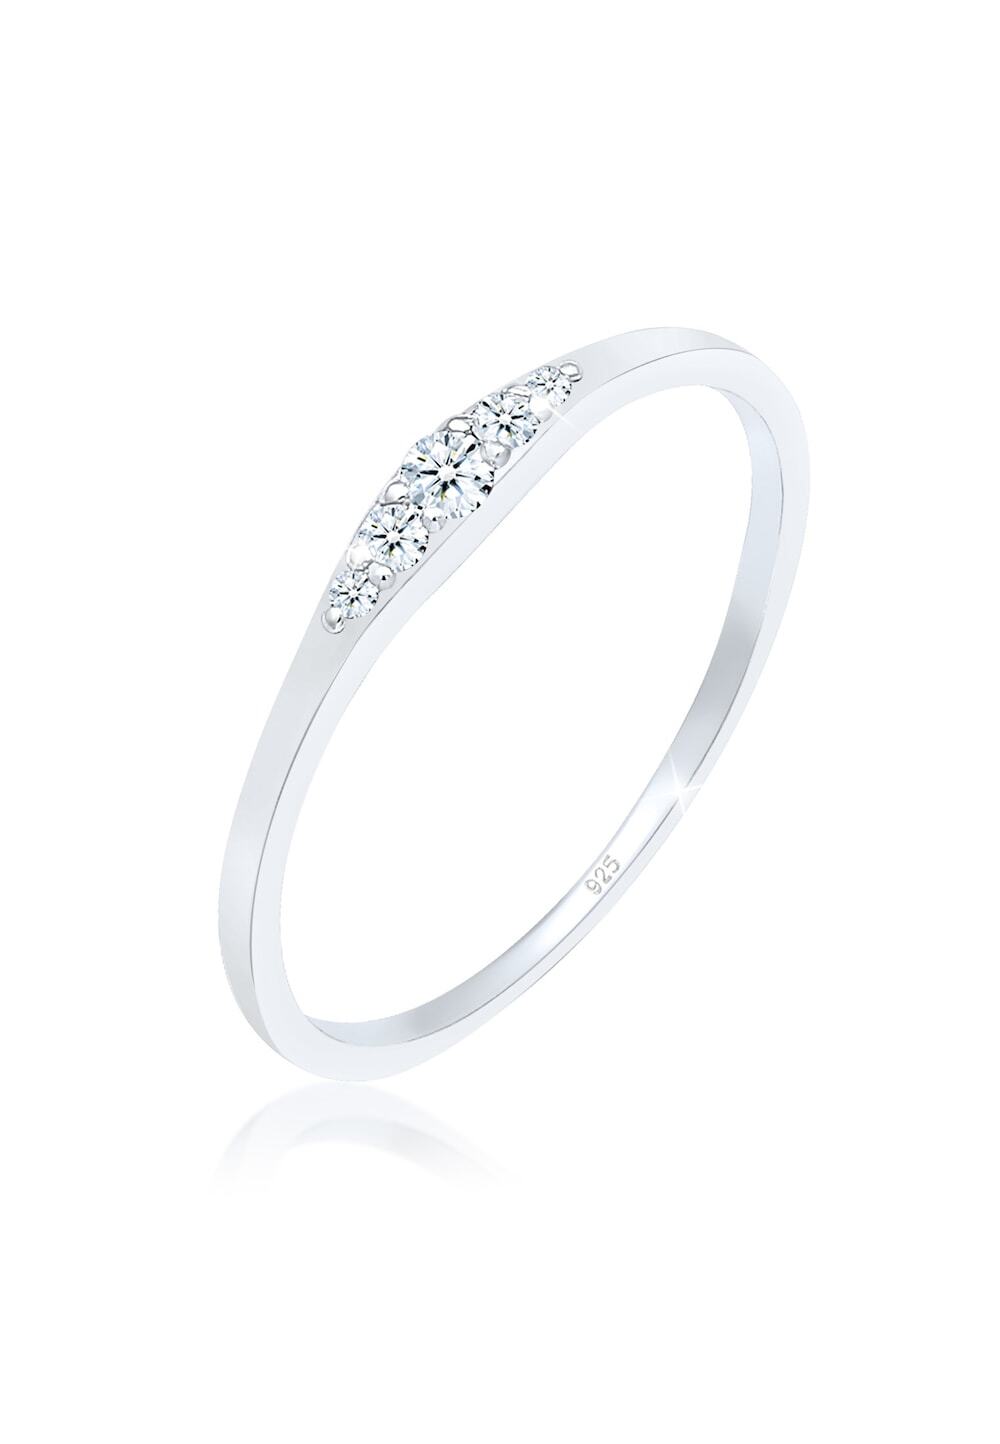 Elli DIAMONDS Elli DIAMONDS Elli DIAMONDS Ring Dames Verlovingsring met Diamant (0.07 ct) Bridal in 925 Sterling Zilver Ringen